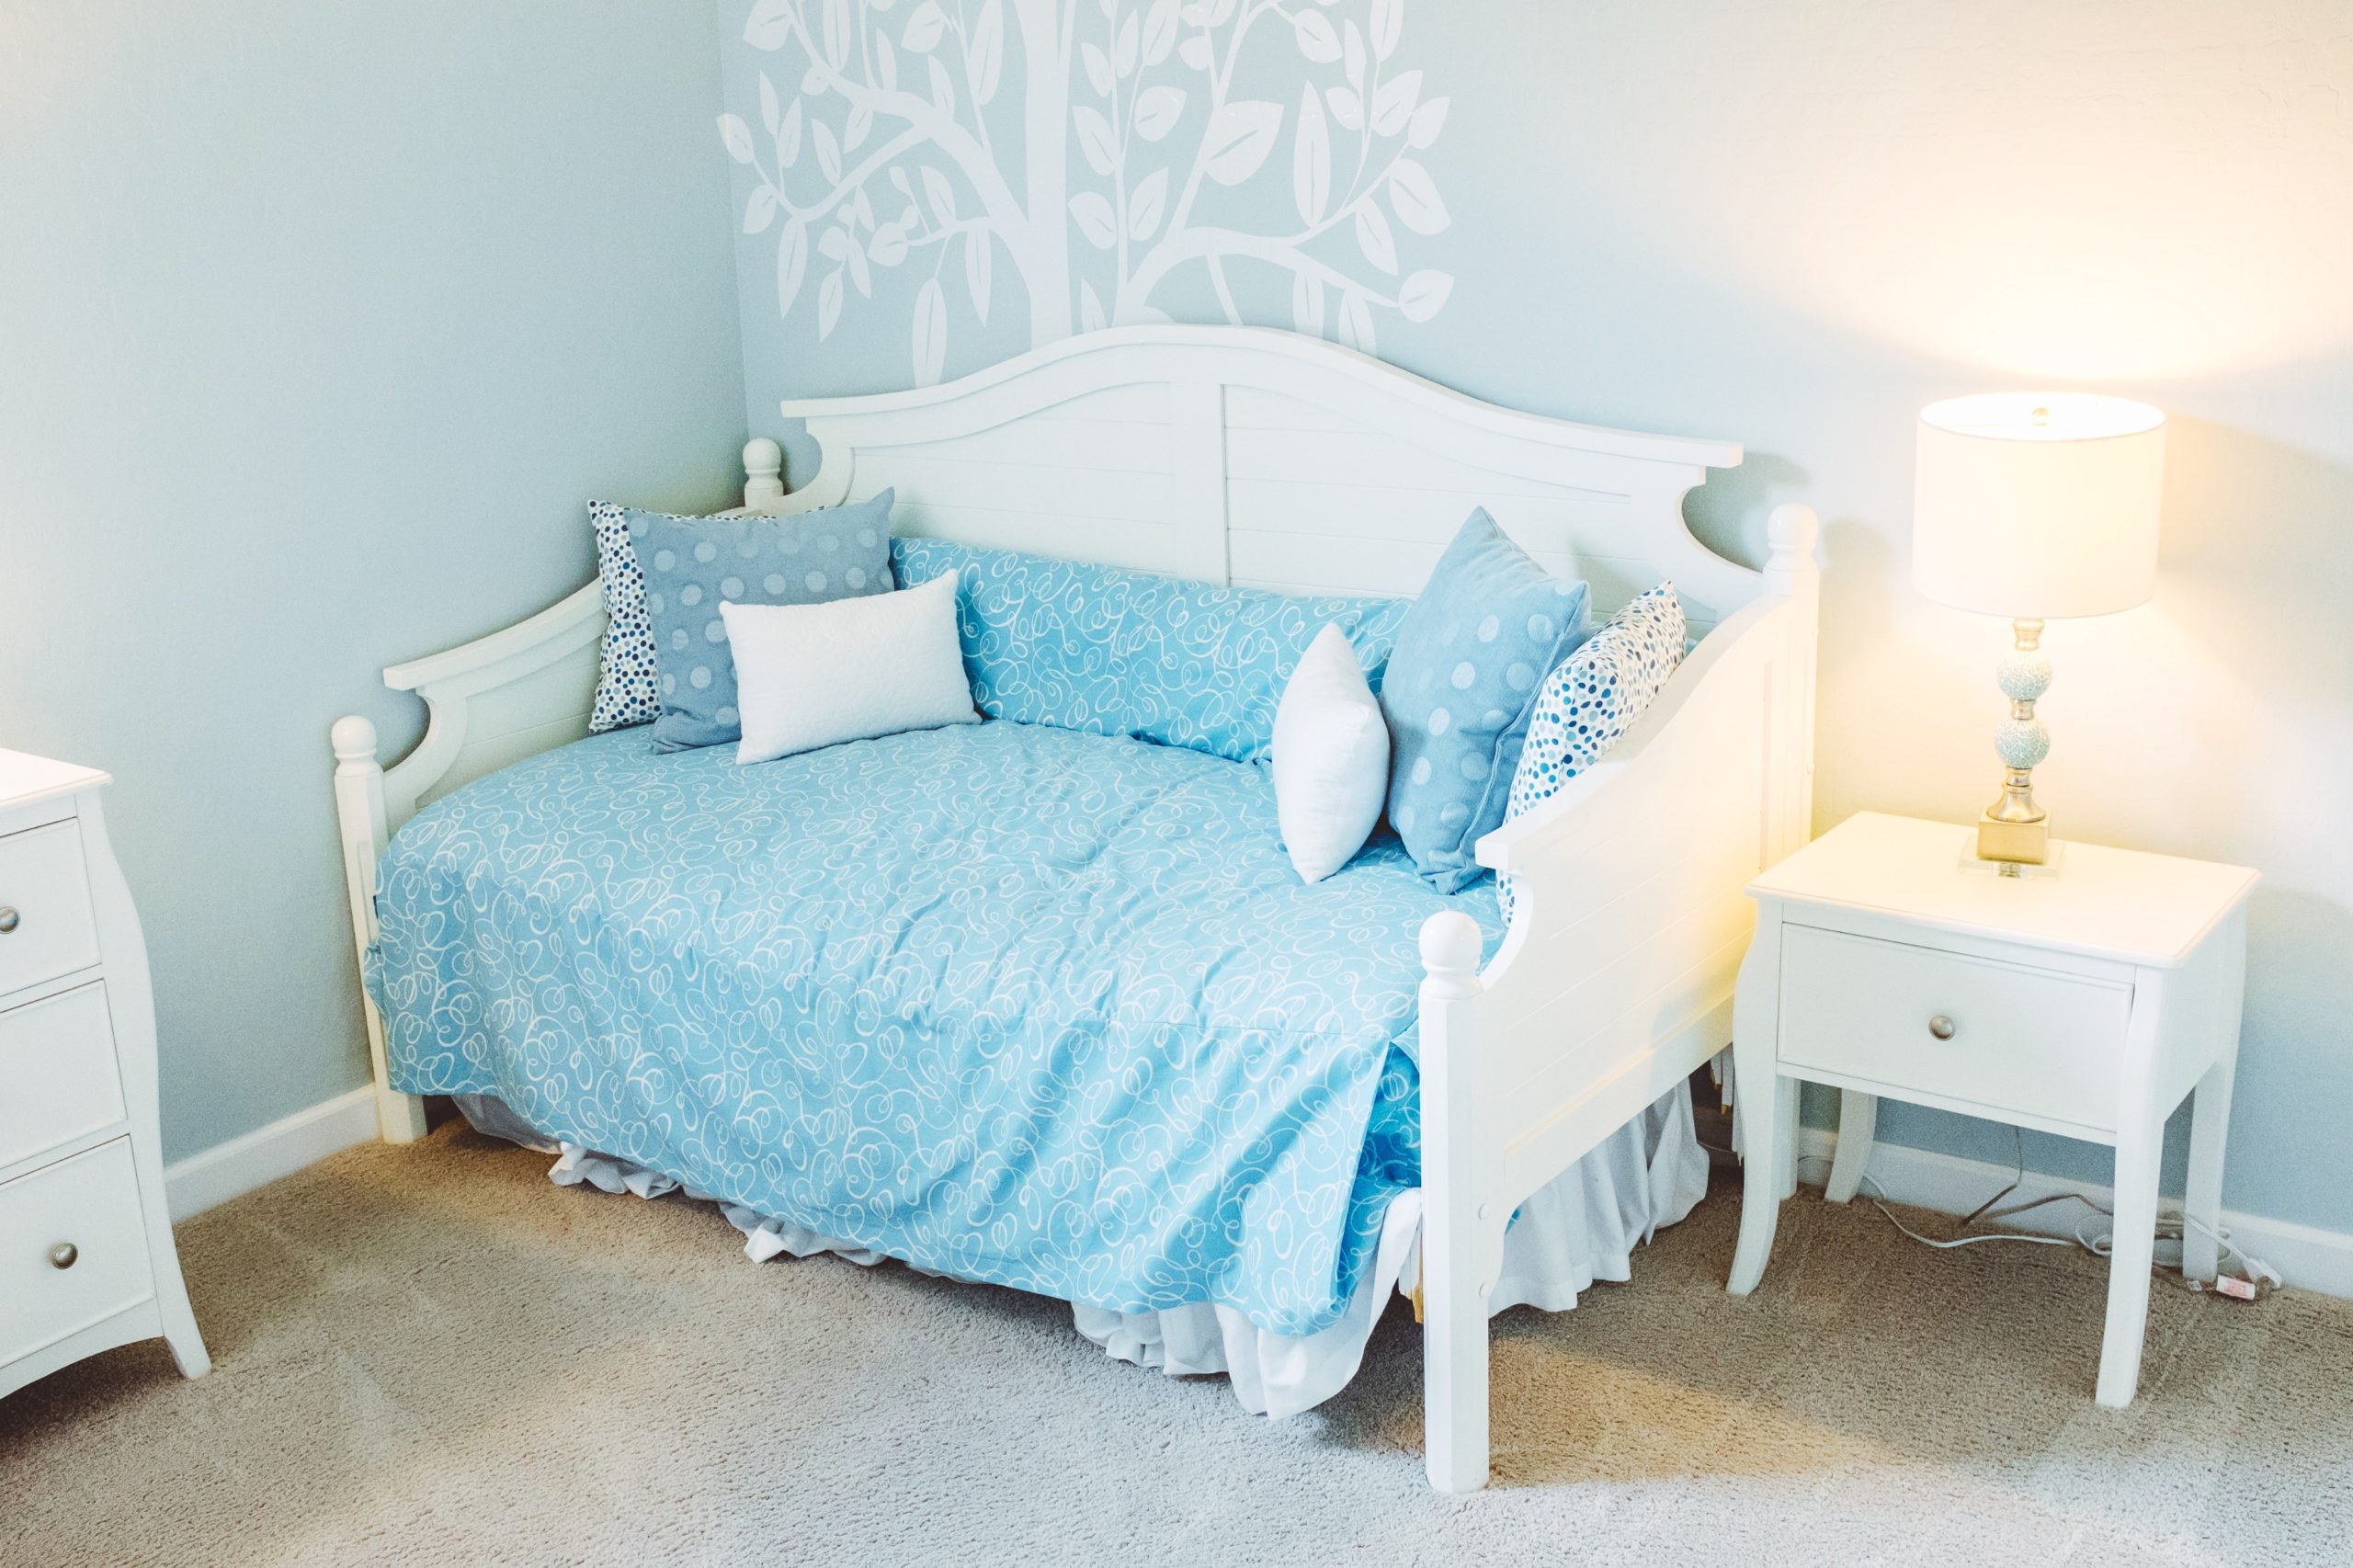 <img src="beautiful.jpg" alt="beautiful blue bedroom with sofa"/> 